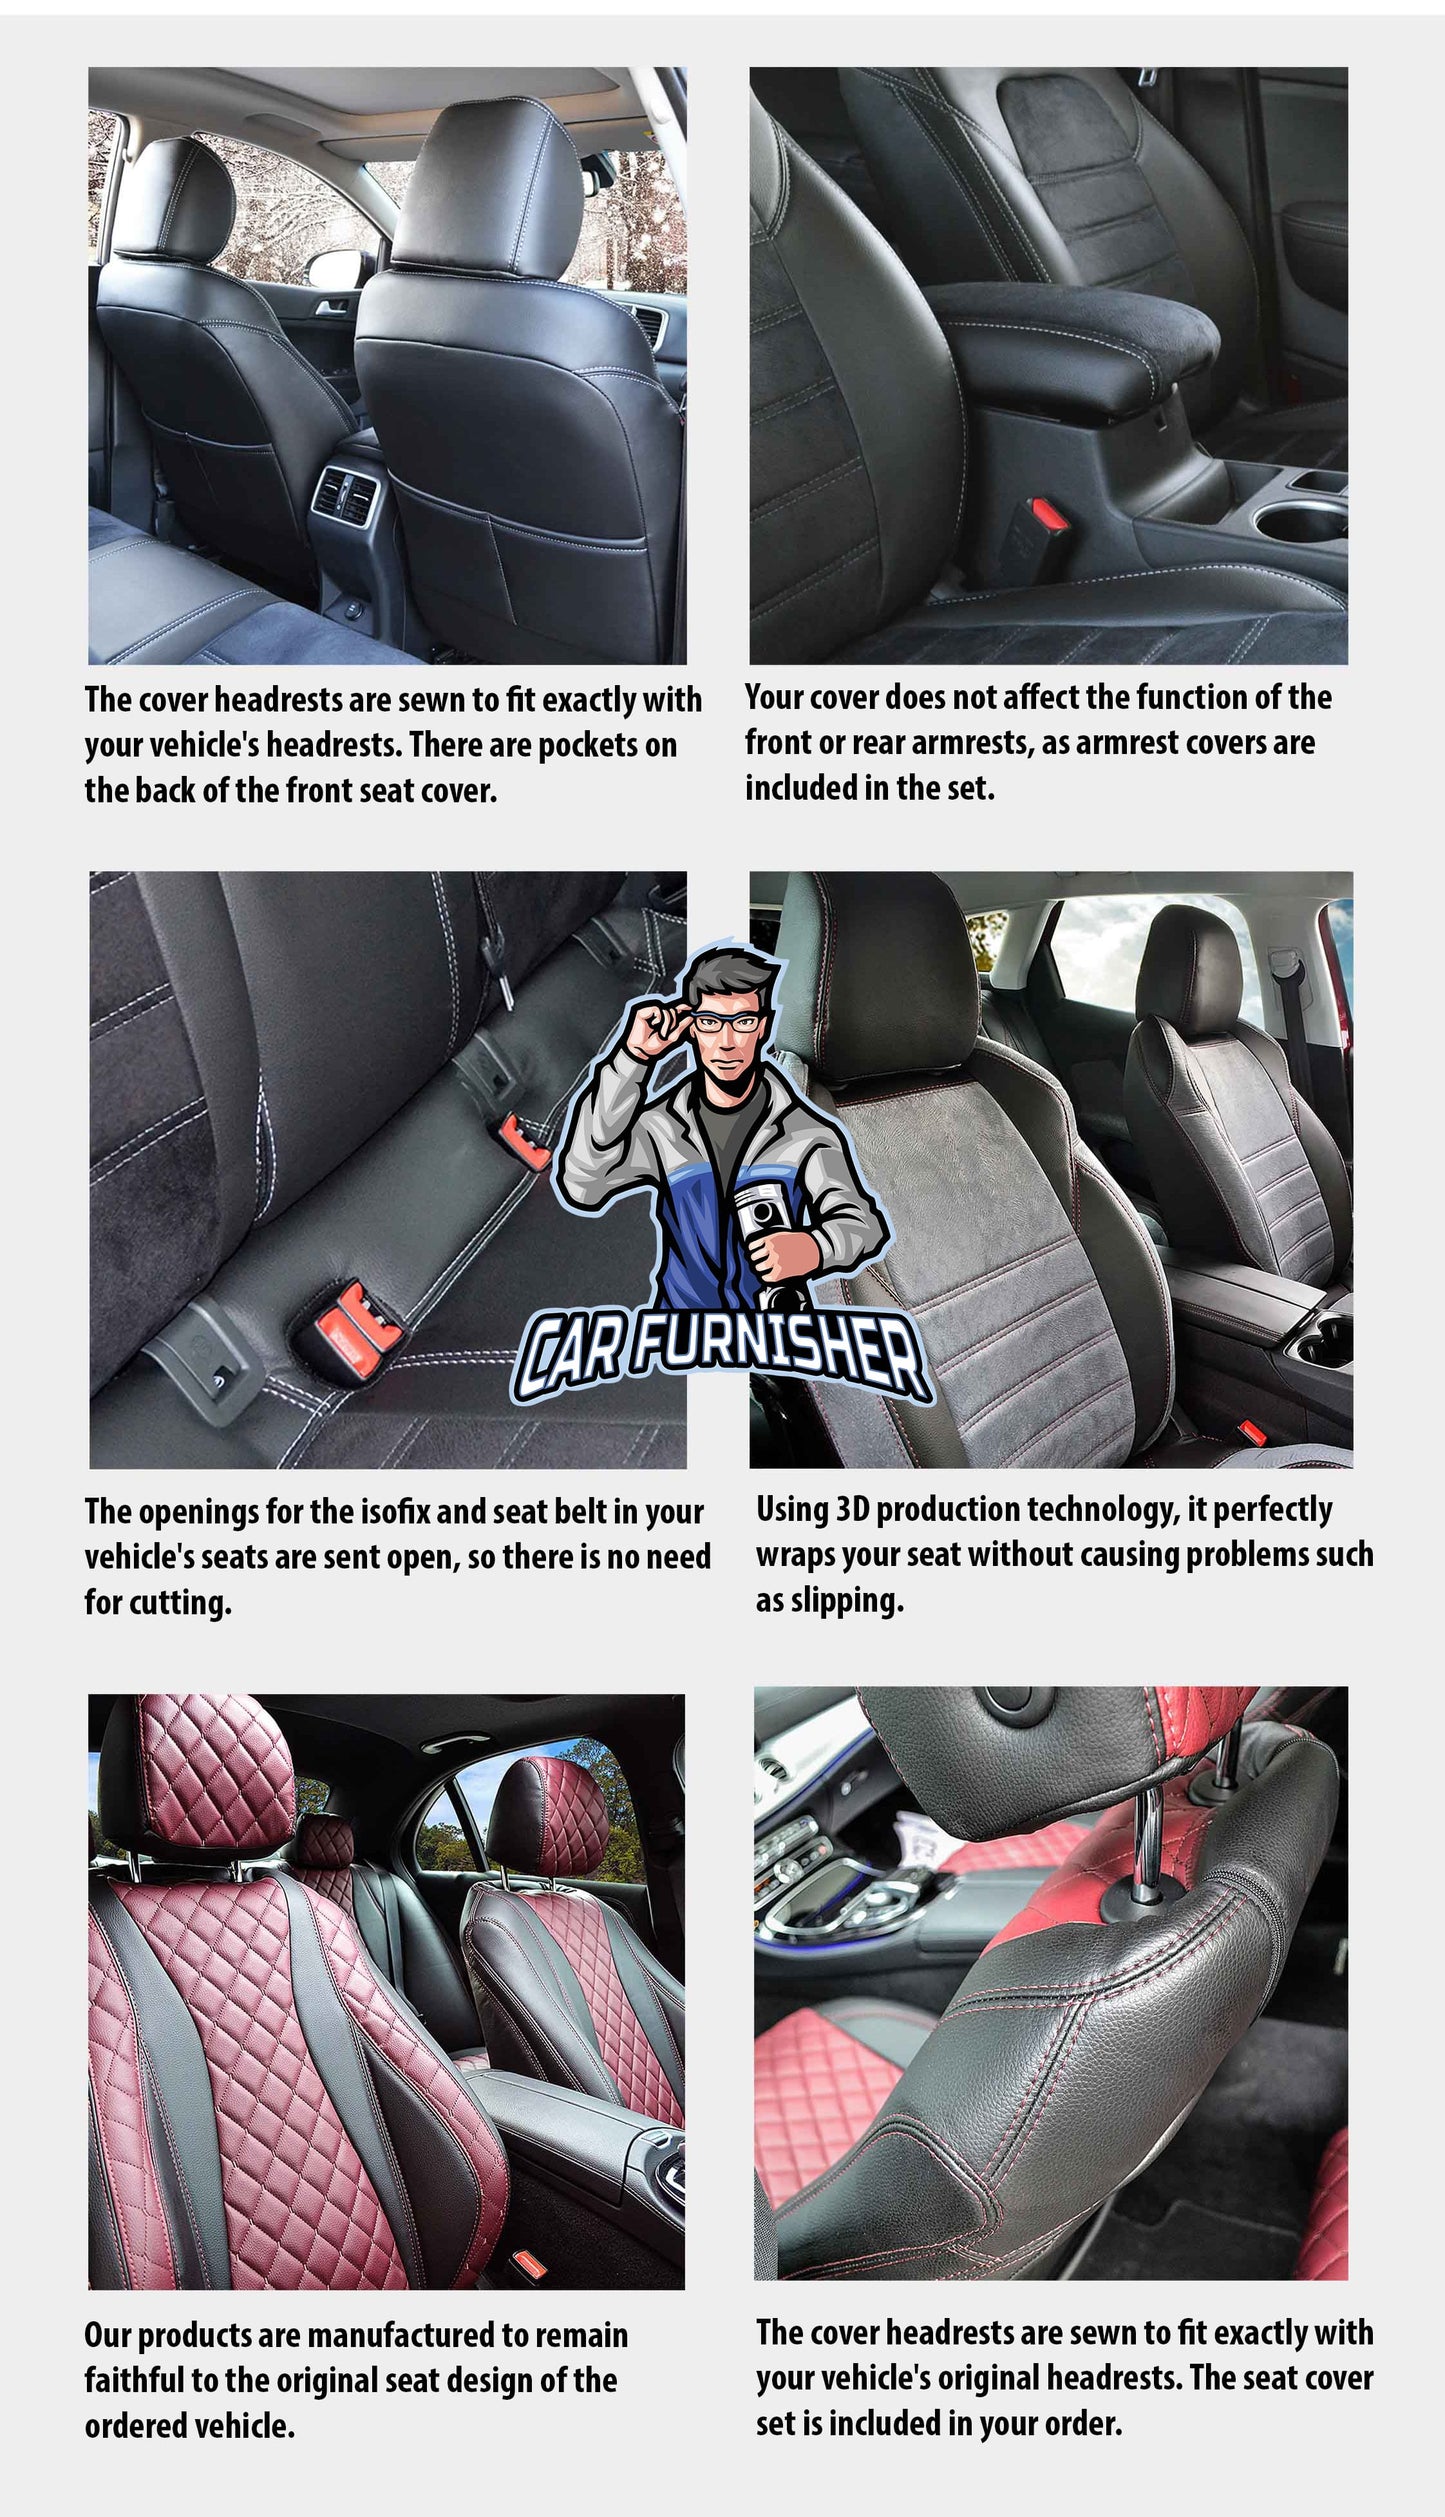 Dacia Duster Seat Covers Camouflage Waterproof Design Sahara Camo Waterproof Fabric